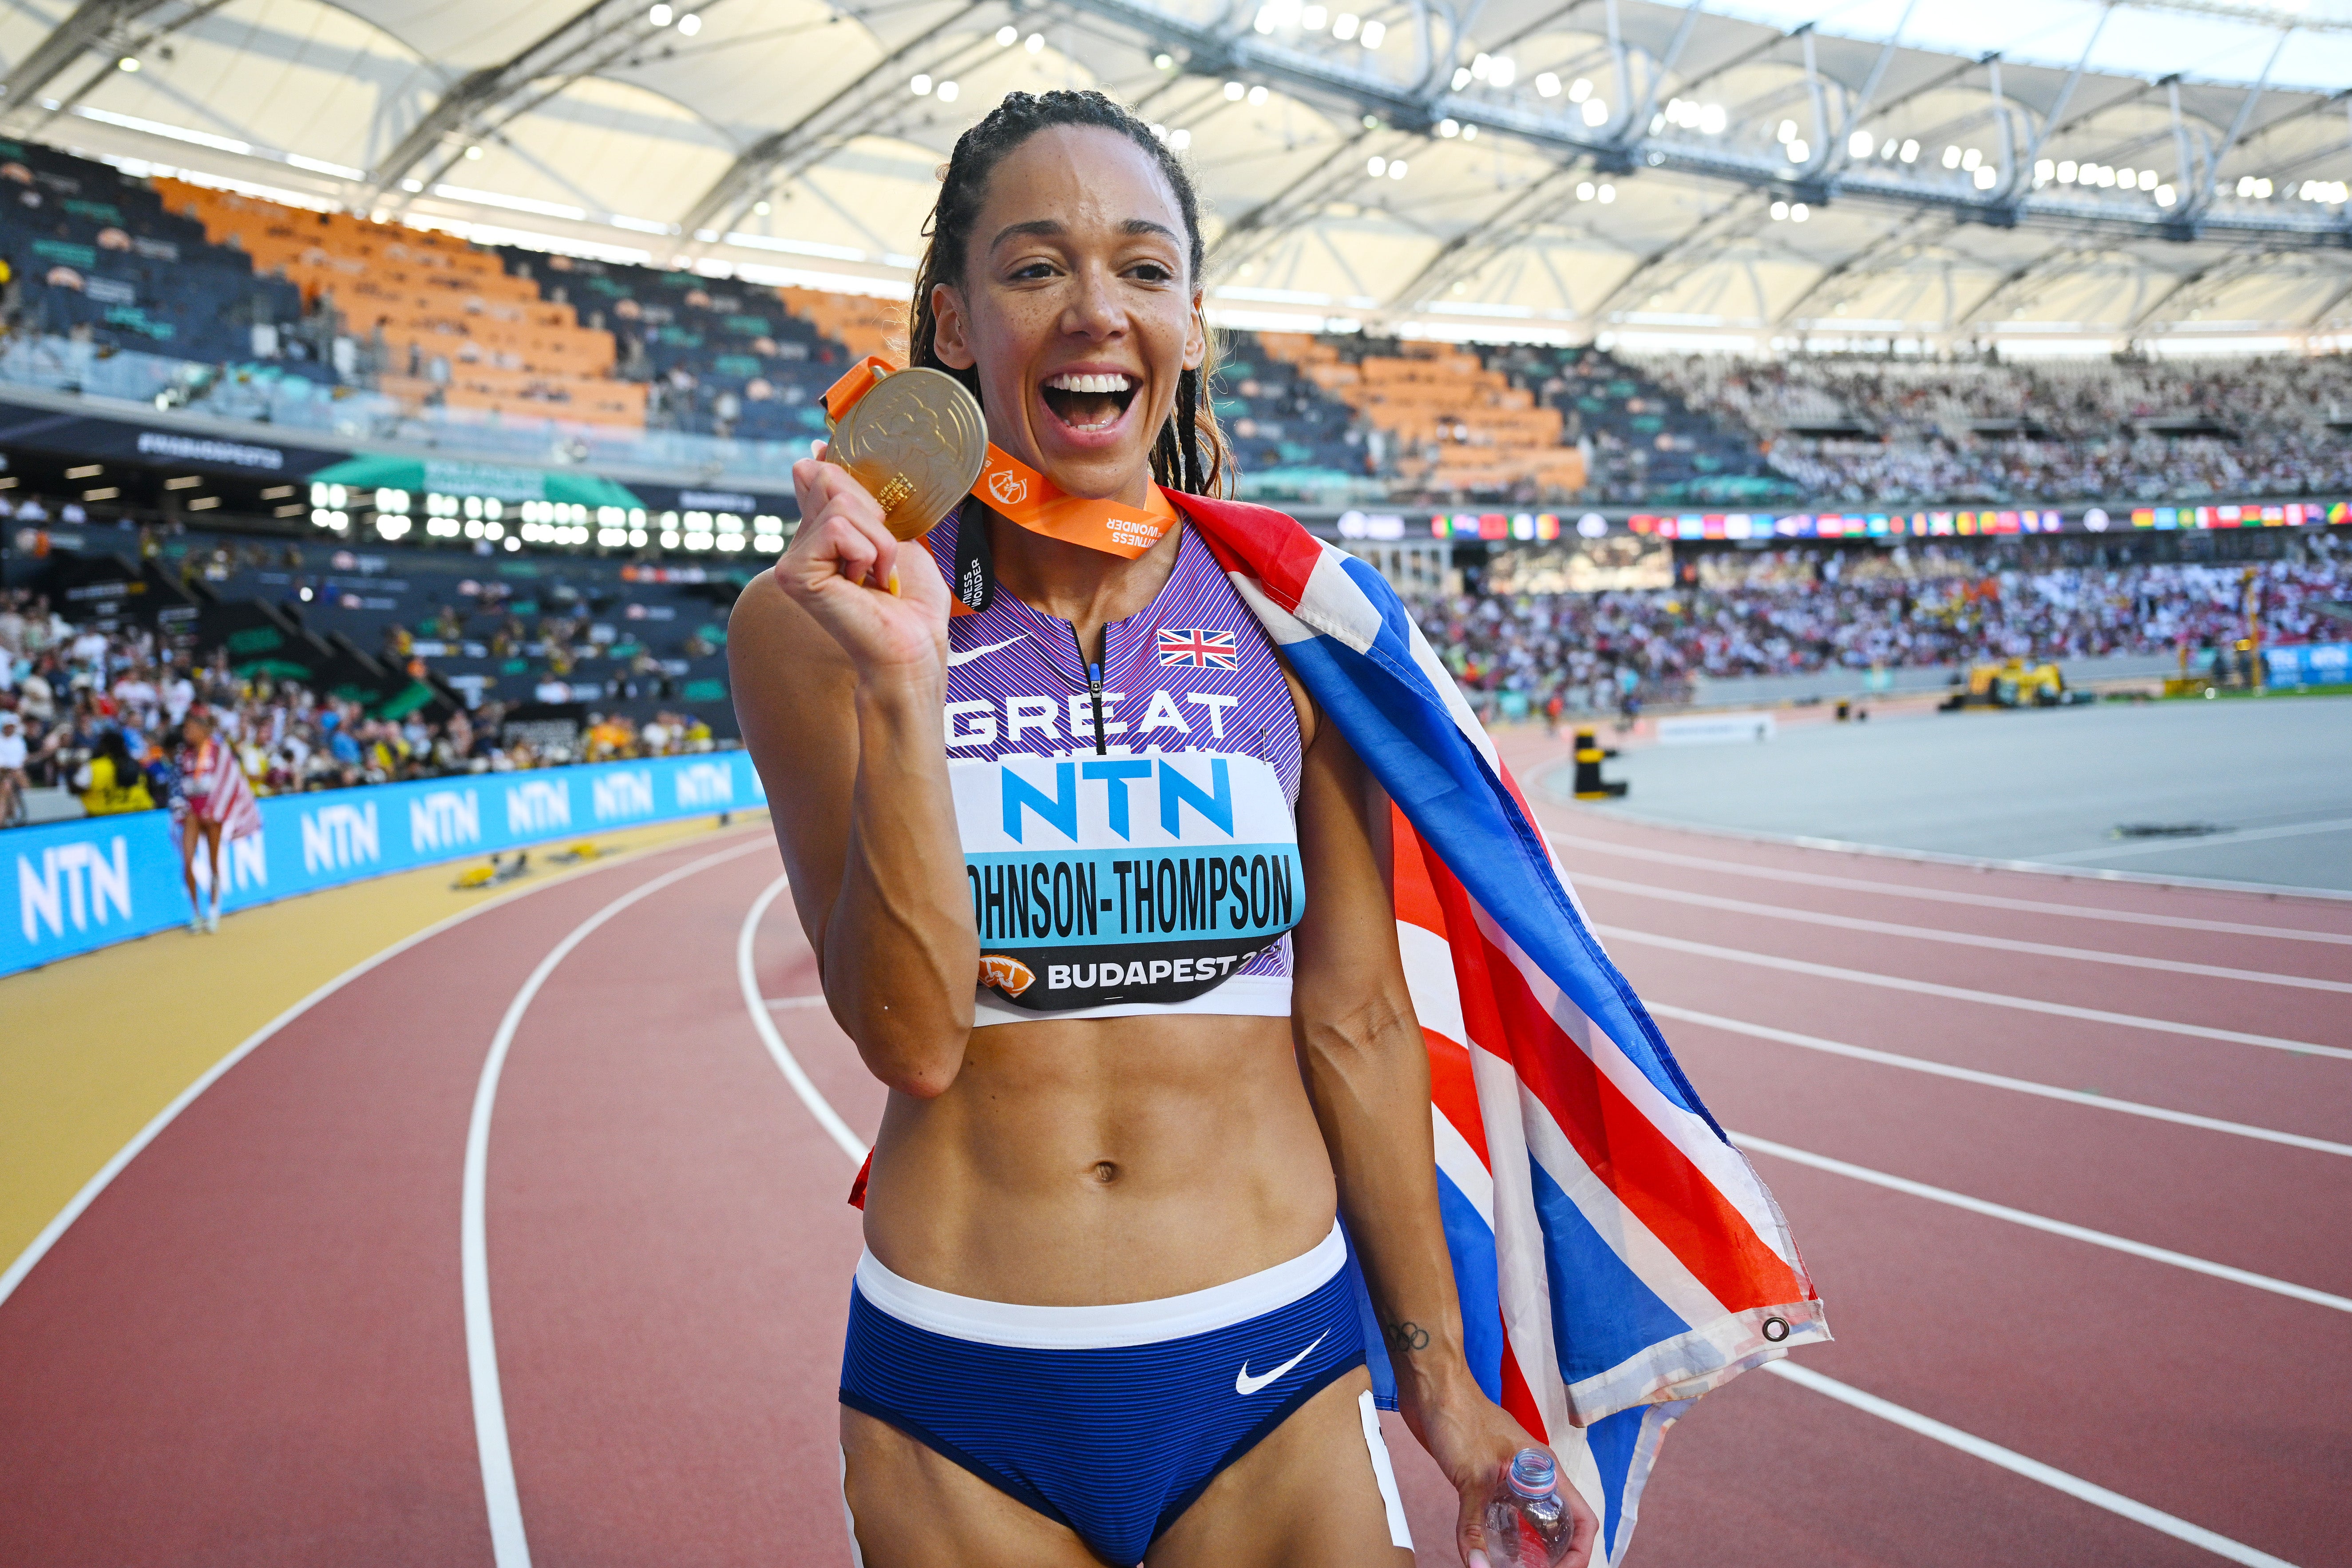 Katarina Johnson-Thompson of Team Great Britain celebrates after winning gold